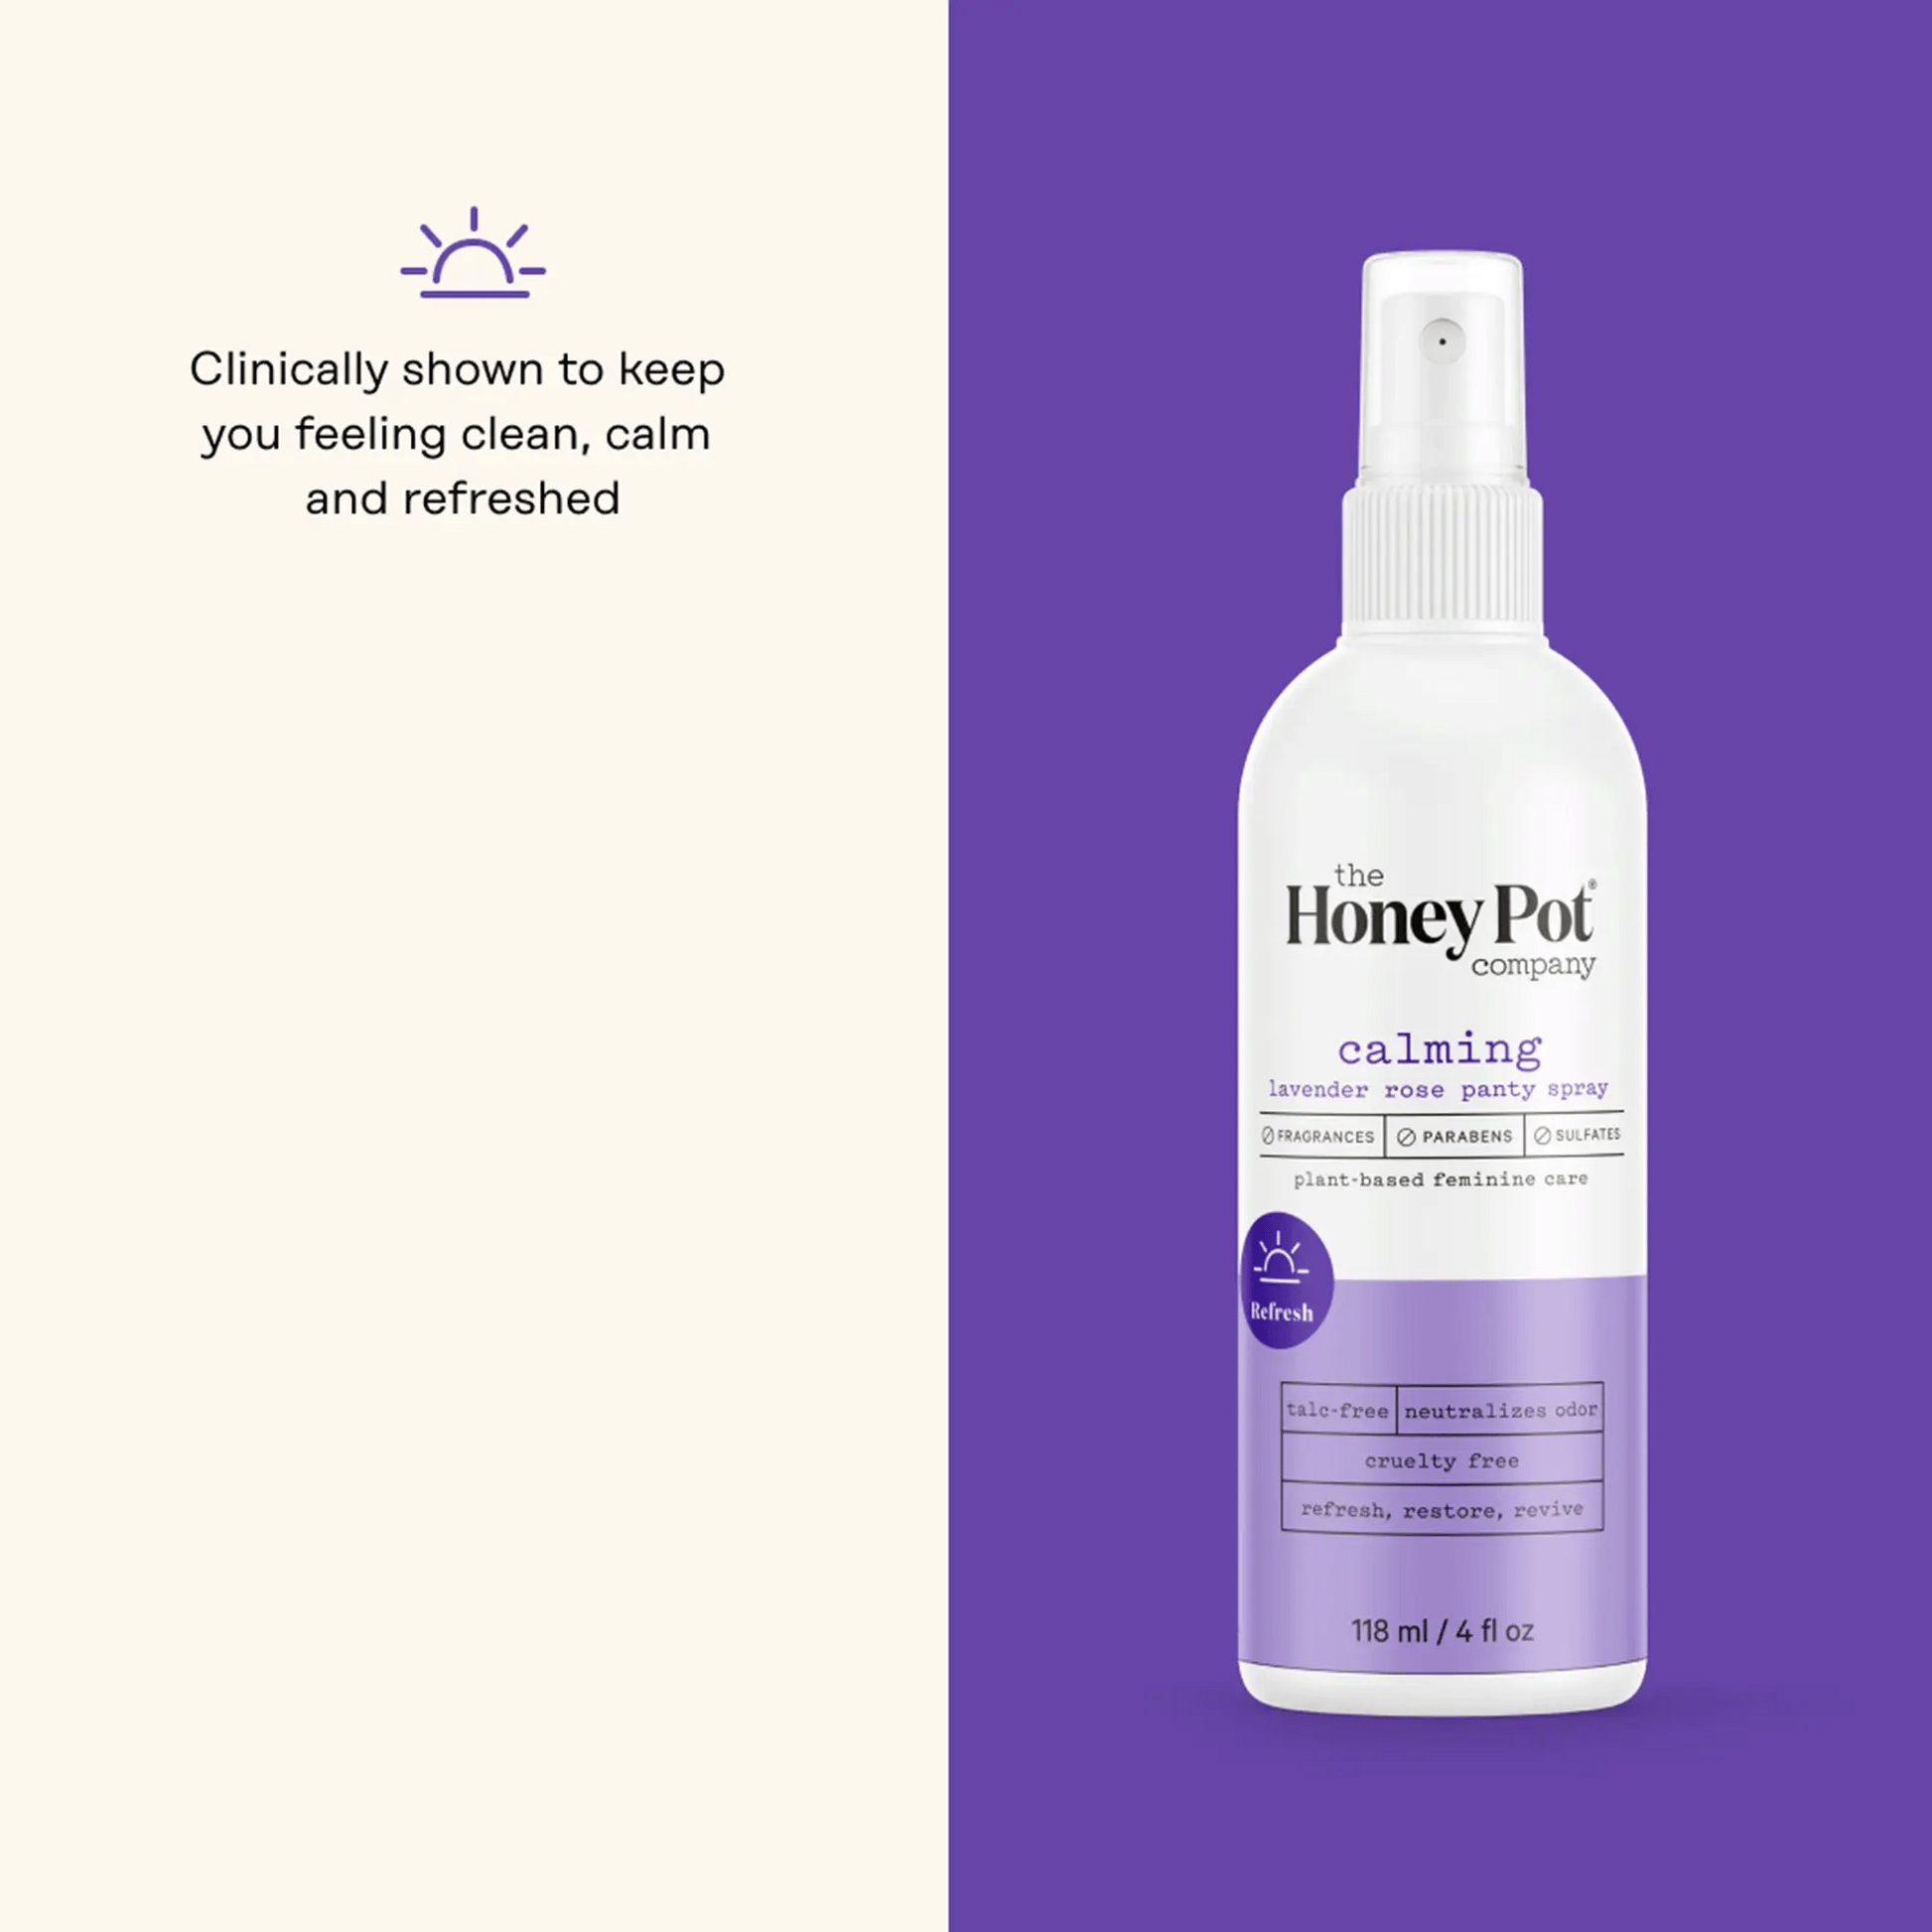 The Honey Pot Calming Lavender Rose Panty Spray Envy Us Beauty Supply 